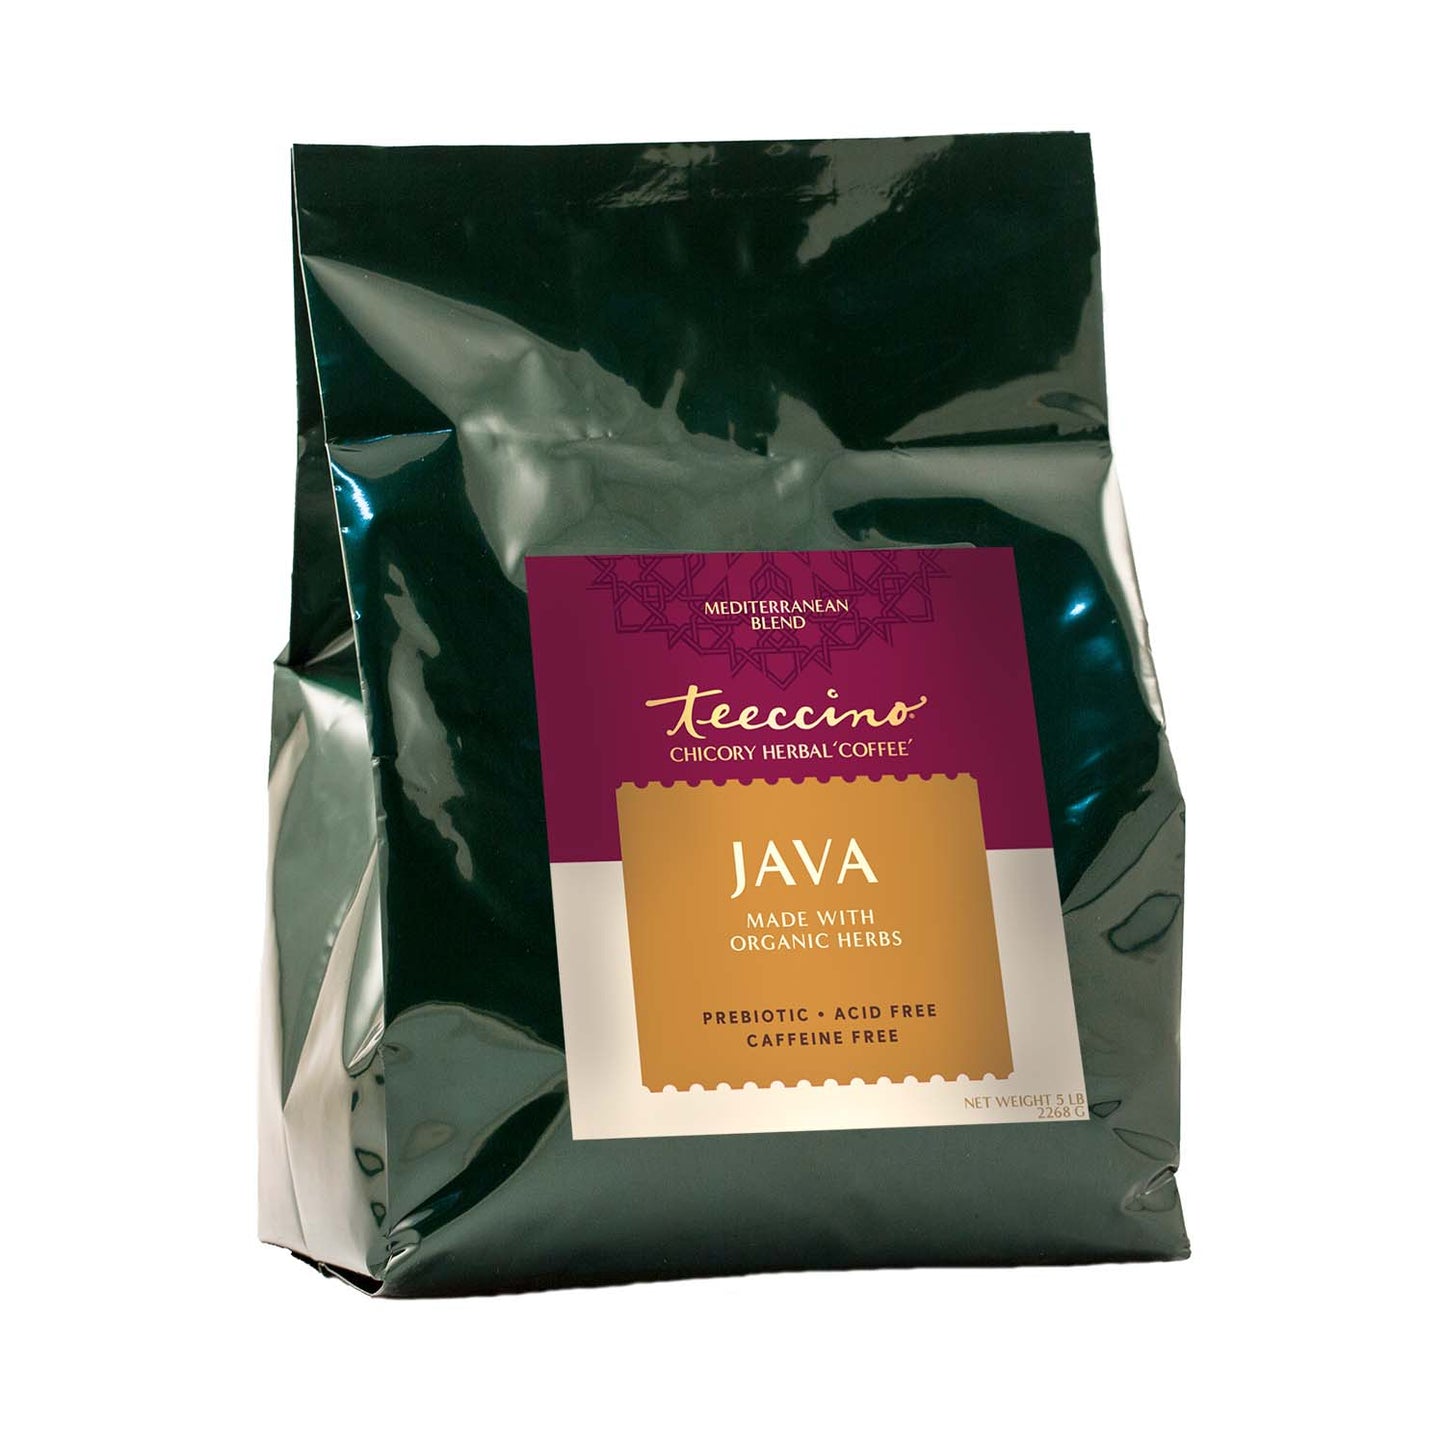 Java Chicory Herbal Coffee